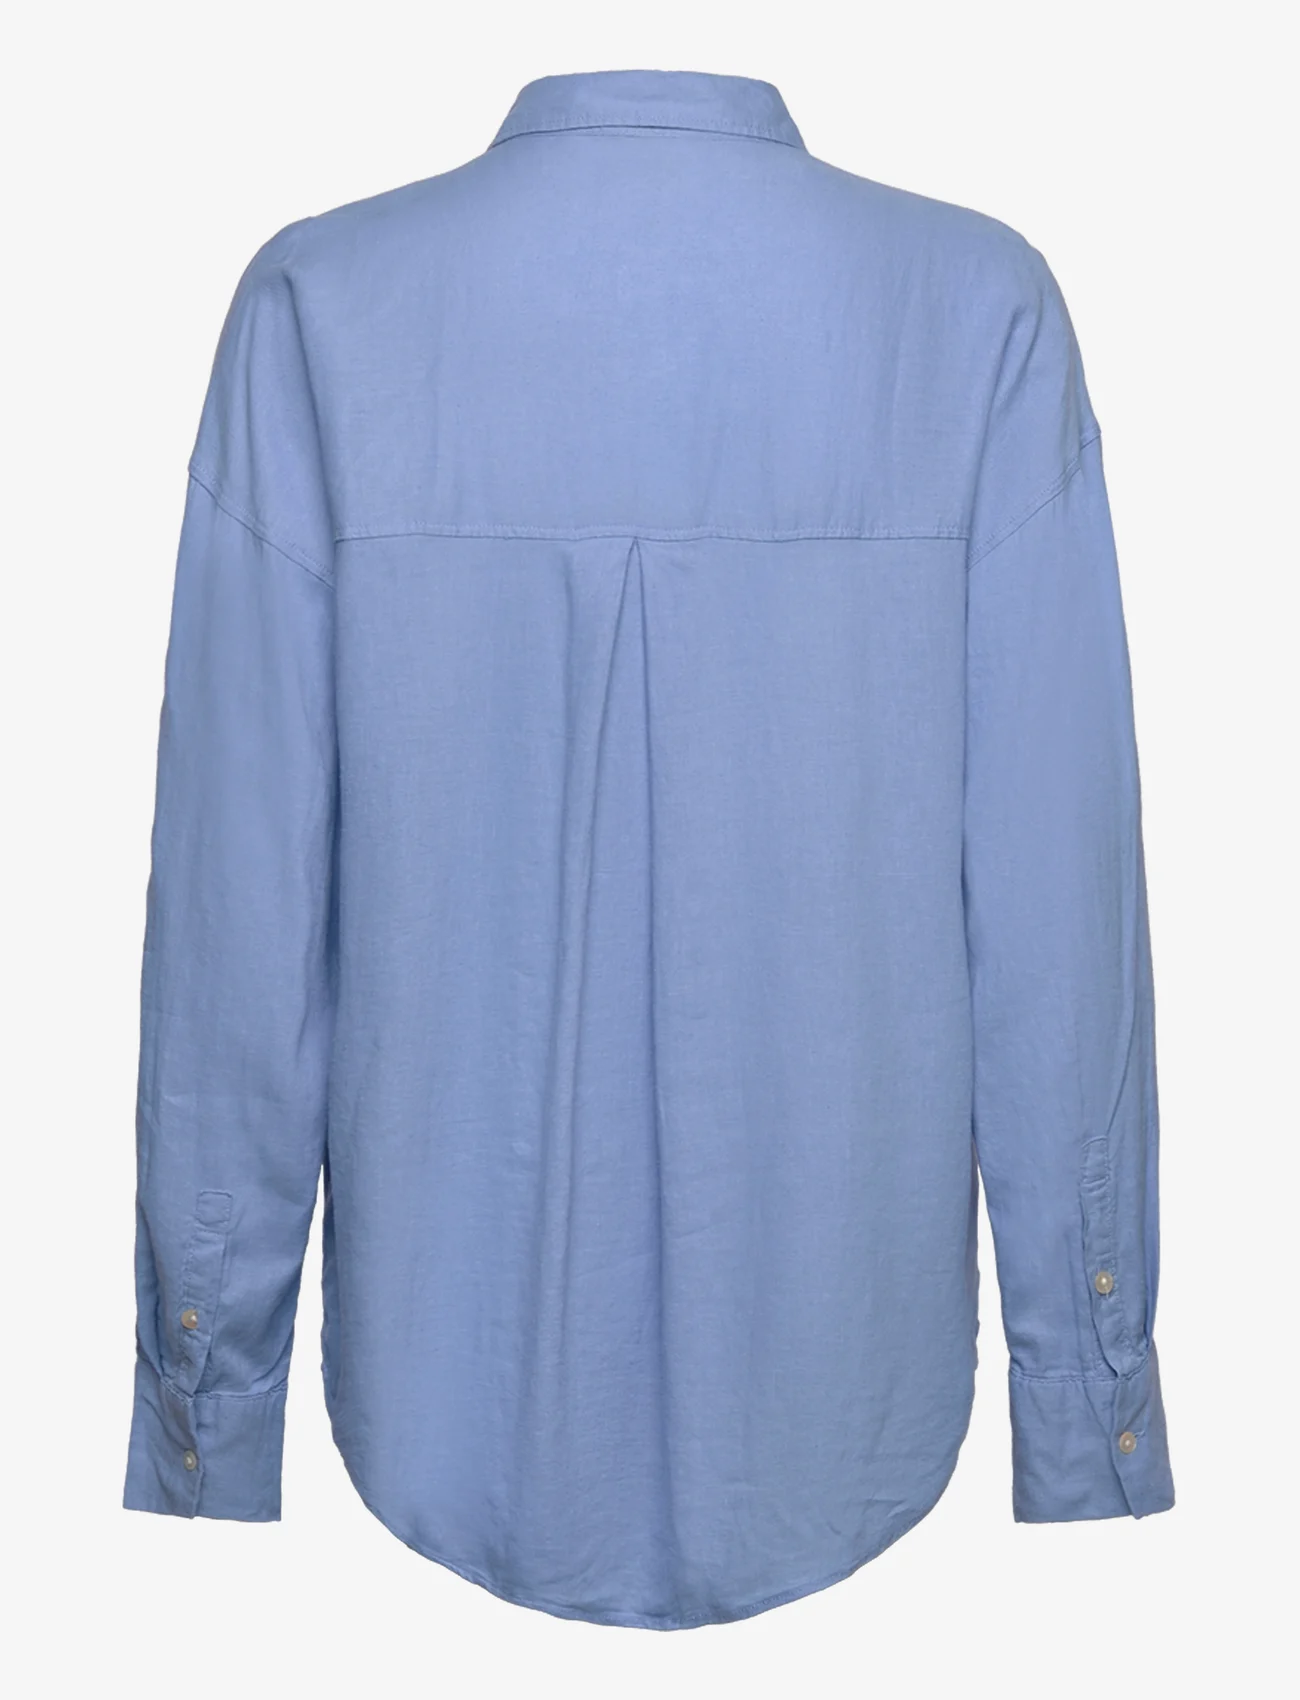 Lindex - Shirt Magda Linen blend - lininiai marškiniai - light blue - 1